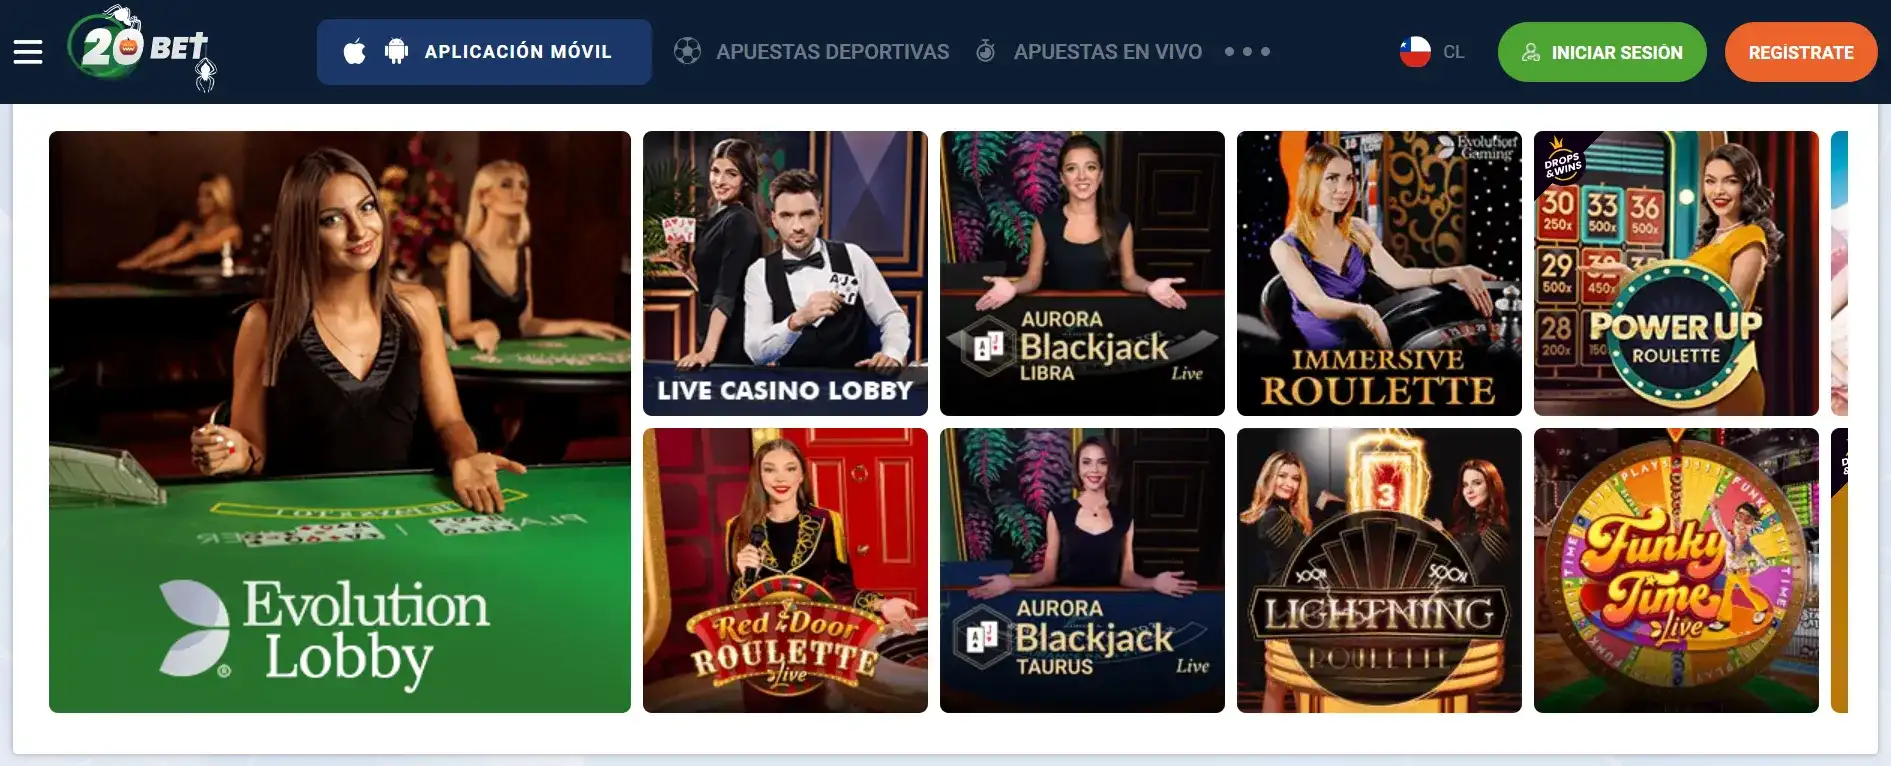 calificaciones casinos online 20bet